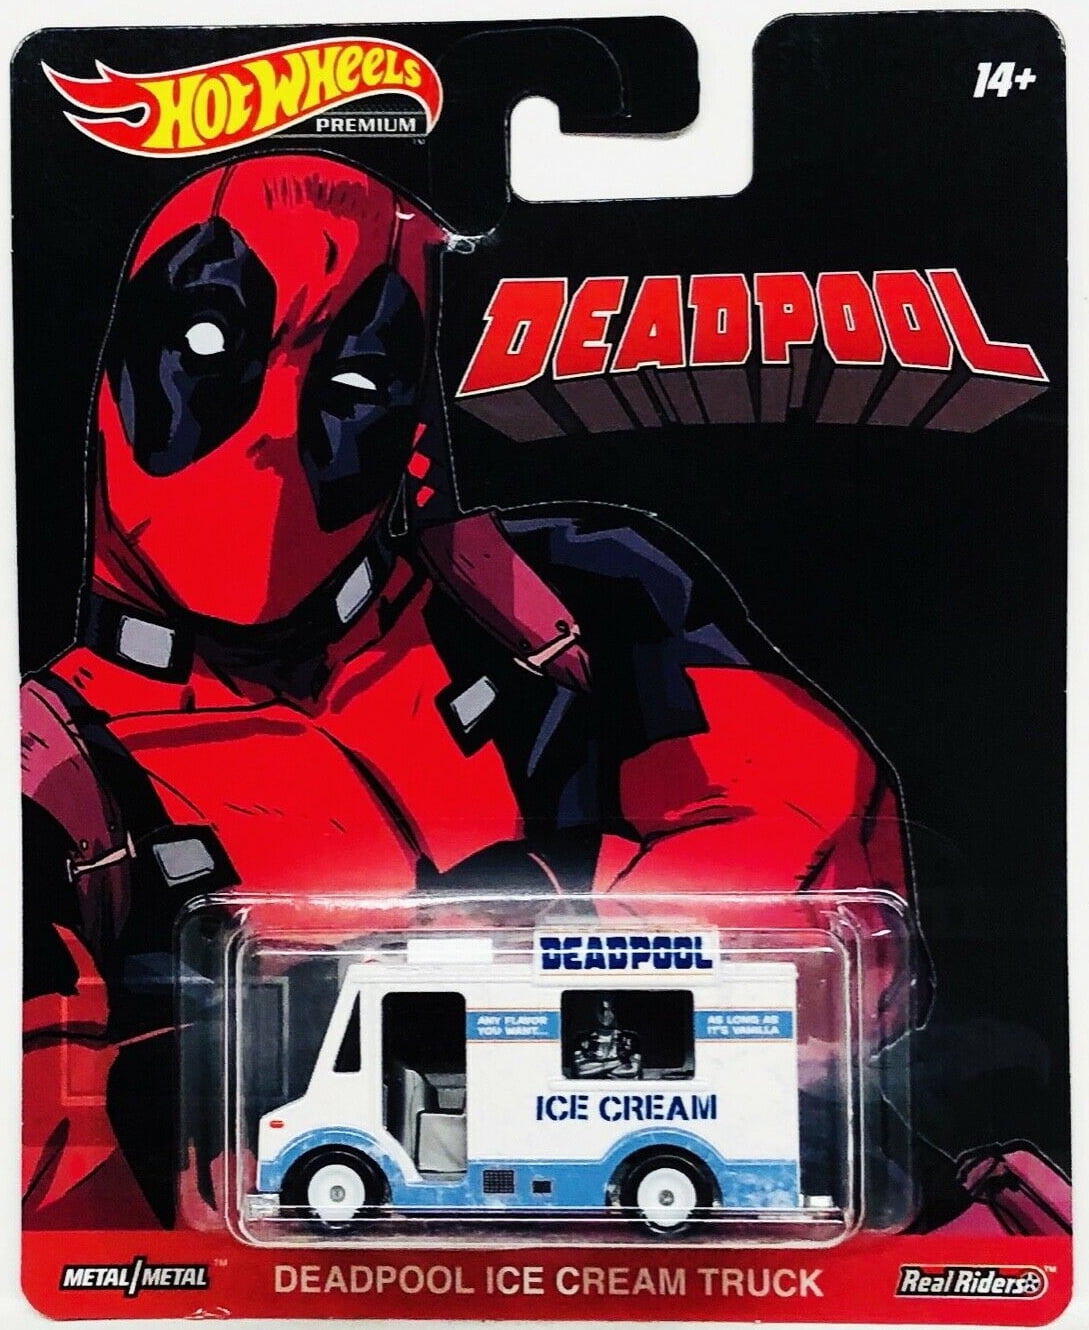 Hot Wheels Deadpool Chimichanga 164 Scale Vehicle